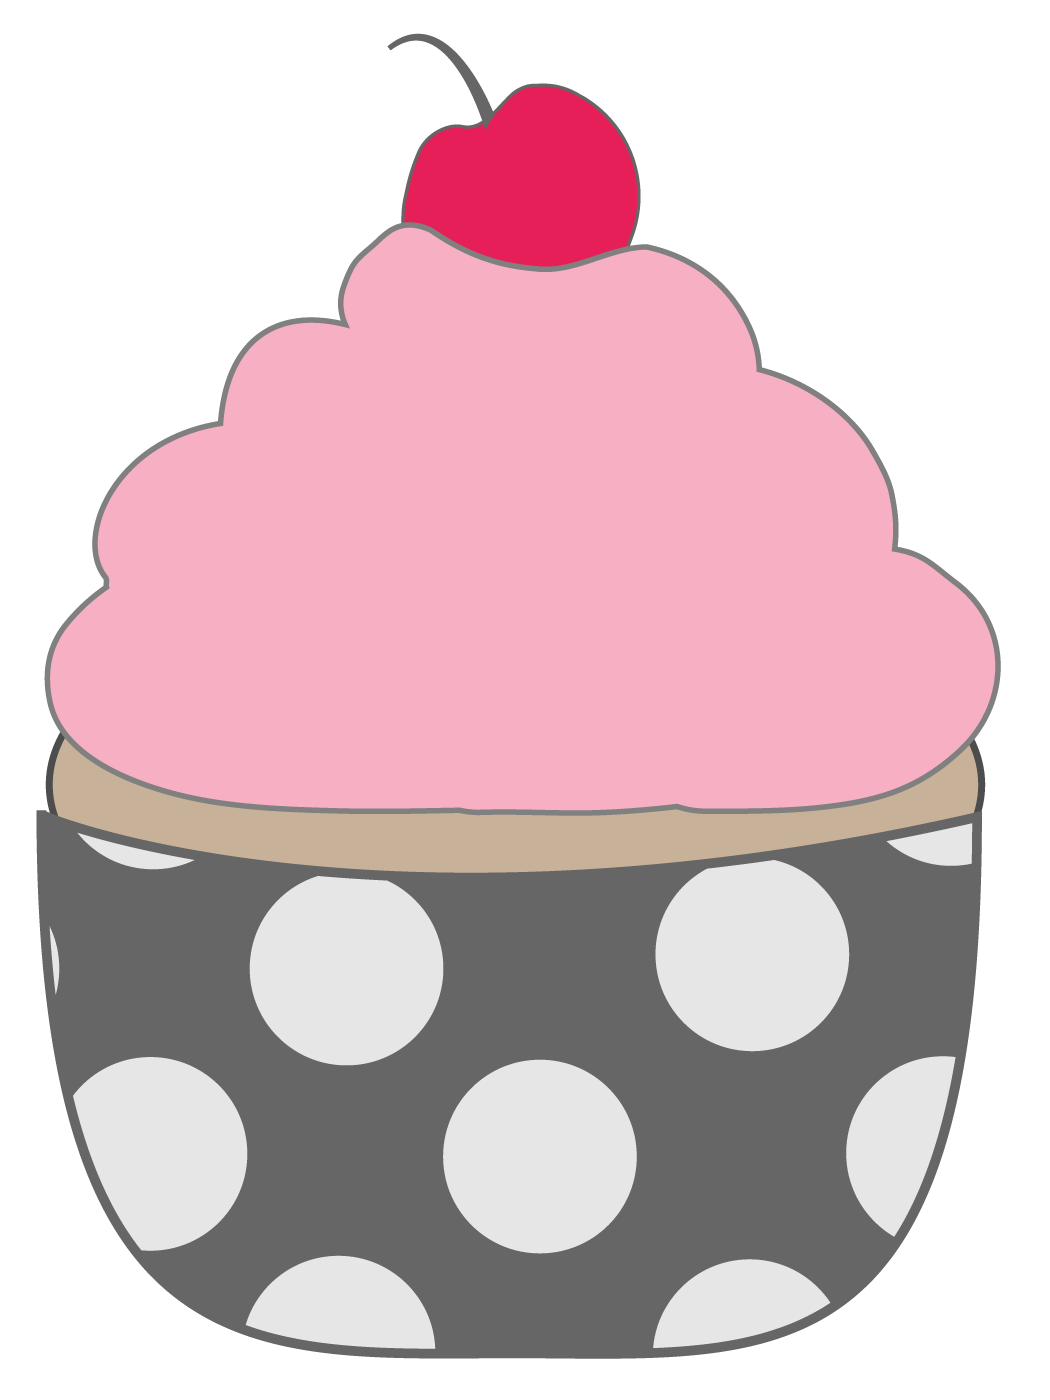 February cupcake